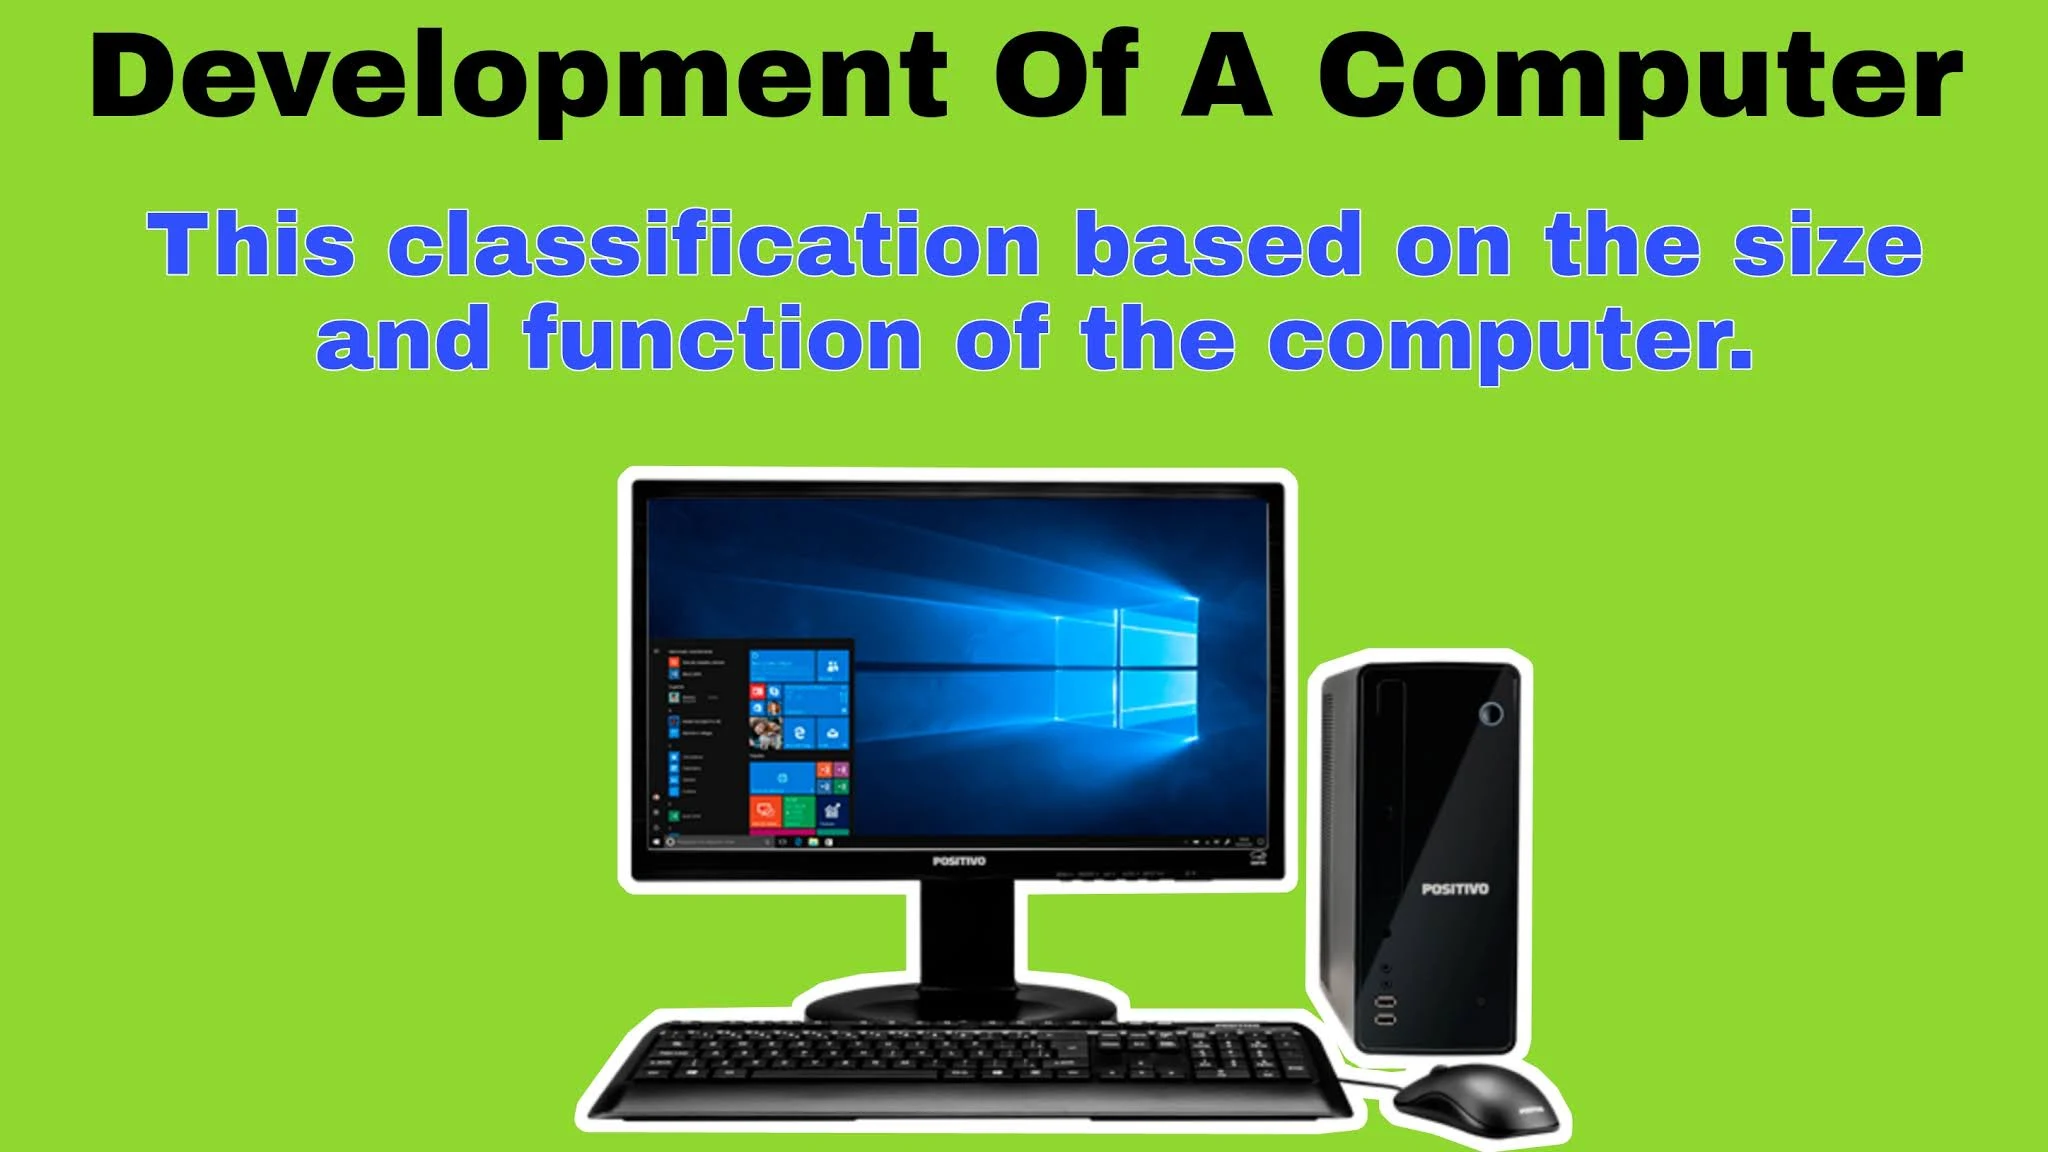 आकर और कार्य के आधार पर कम्प्यूटर के विकास का वर्गीकरण ( Classification of computer development based on computer size and function )